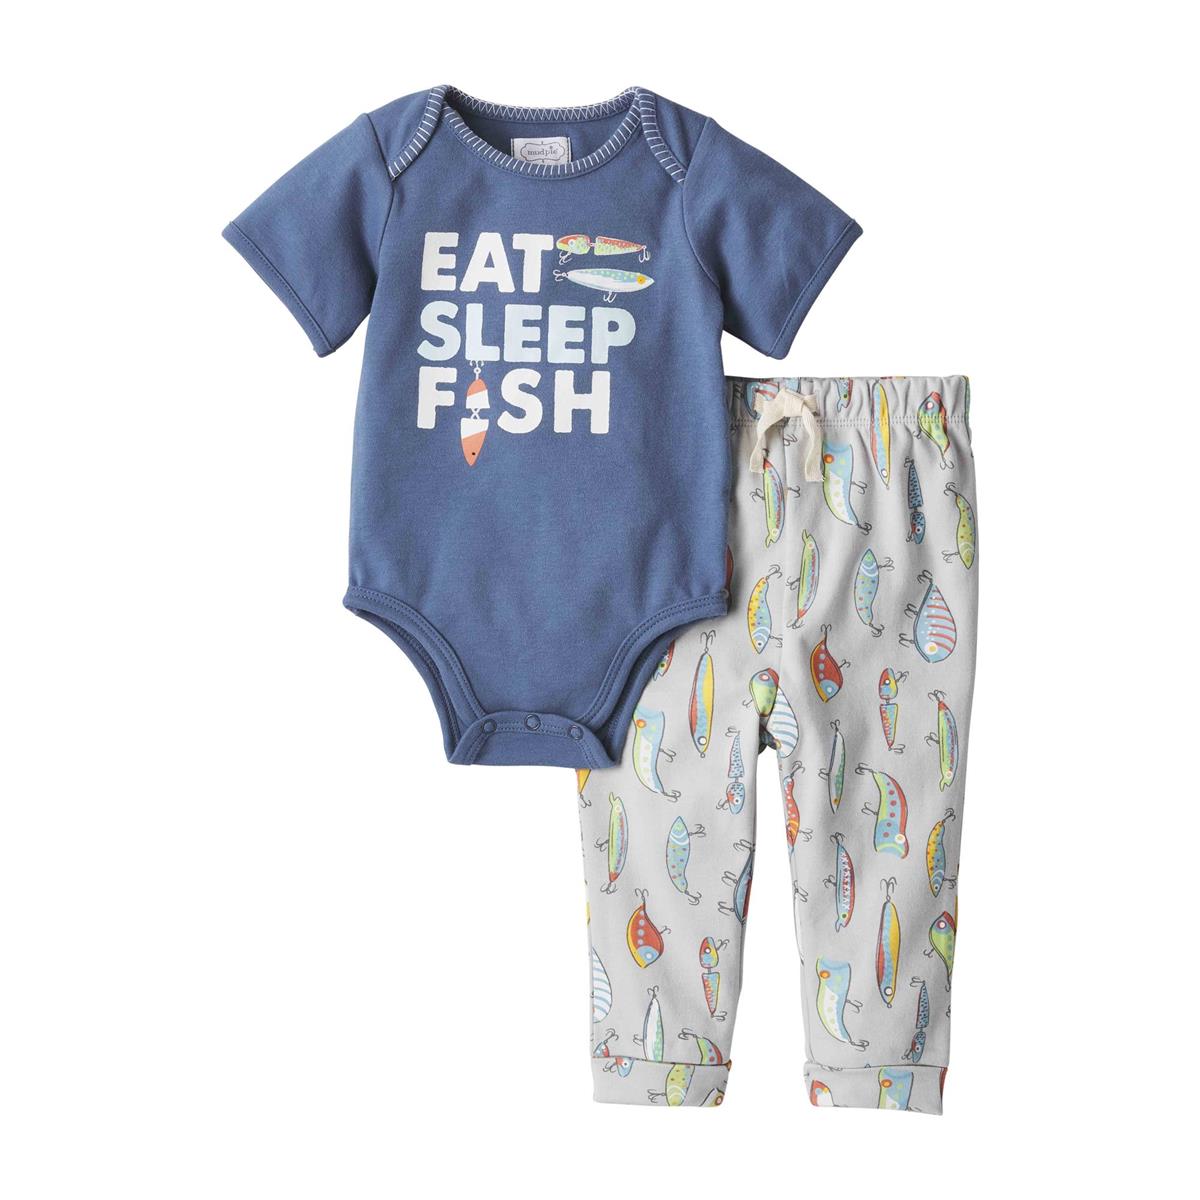 Eat, Sleep Fish Pant Set